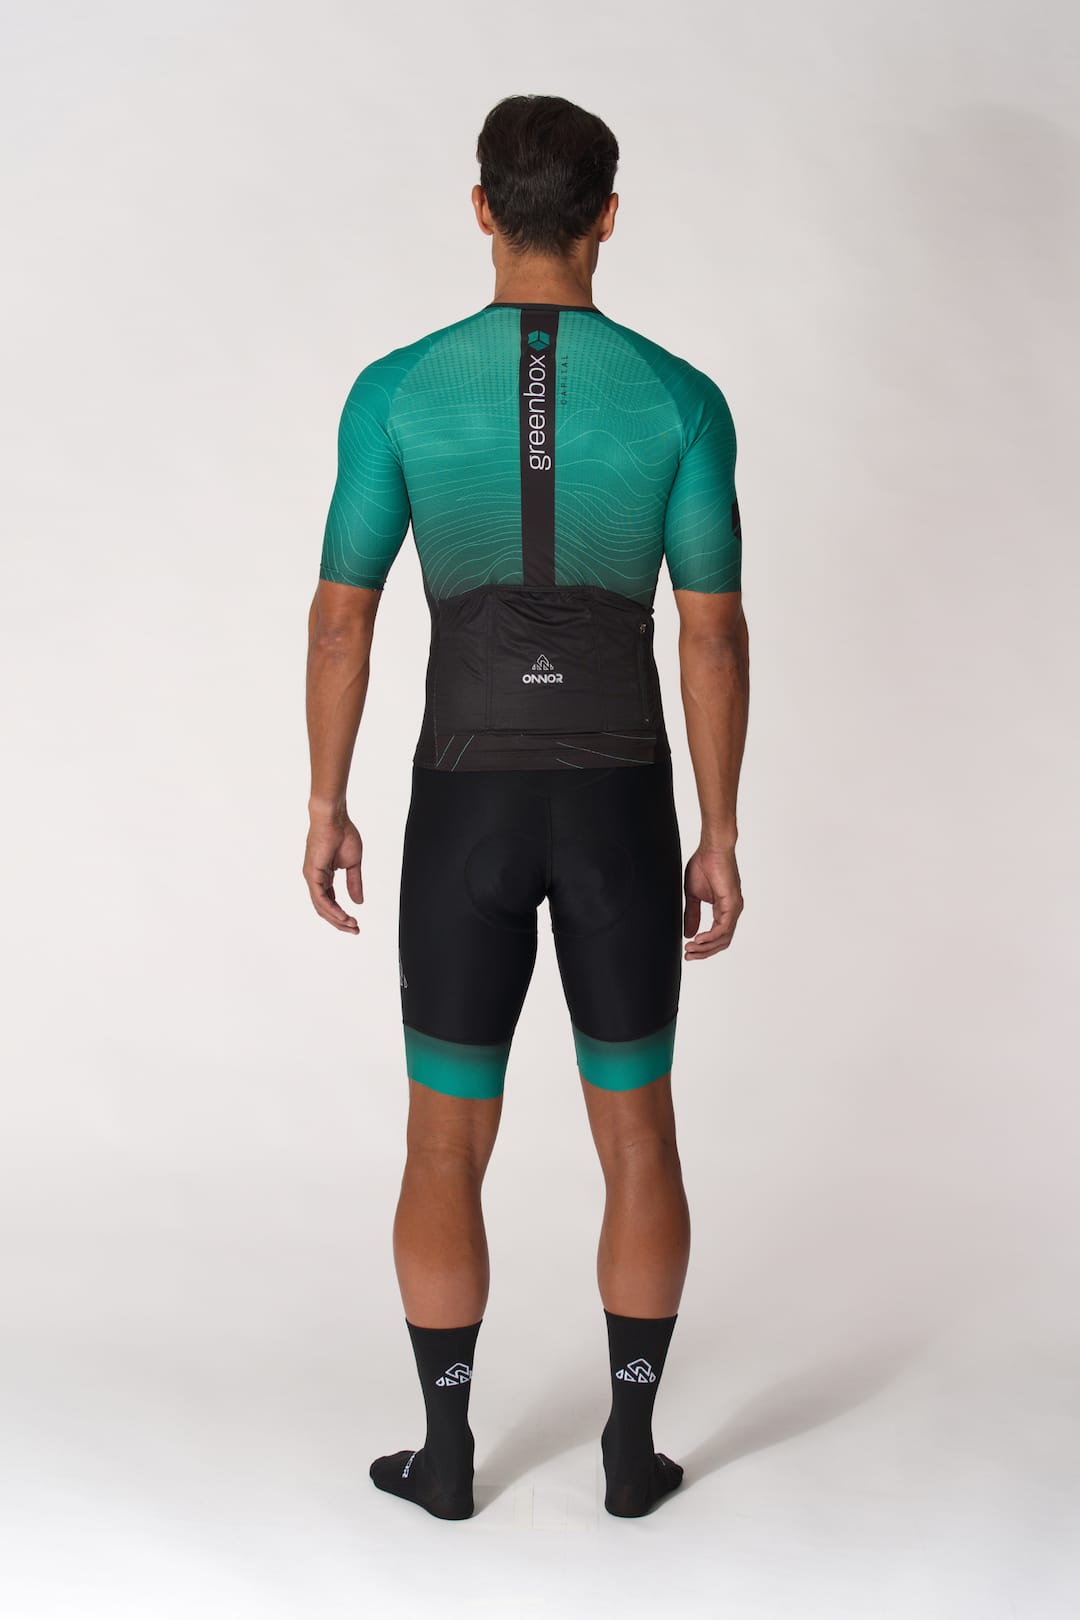 custom cycling jersey no minimum